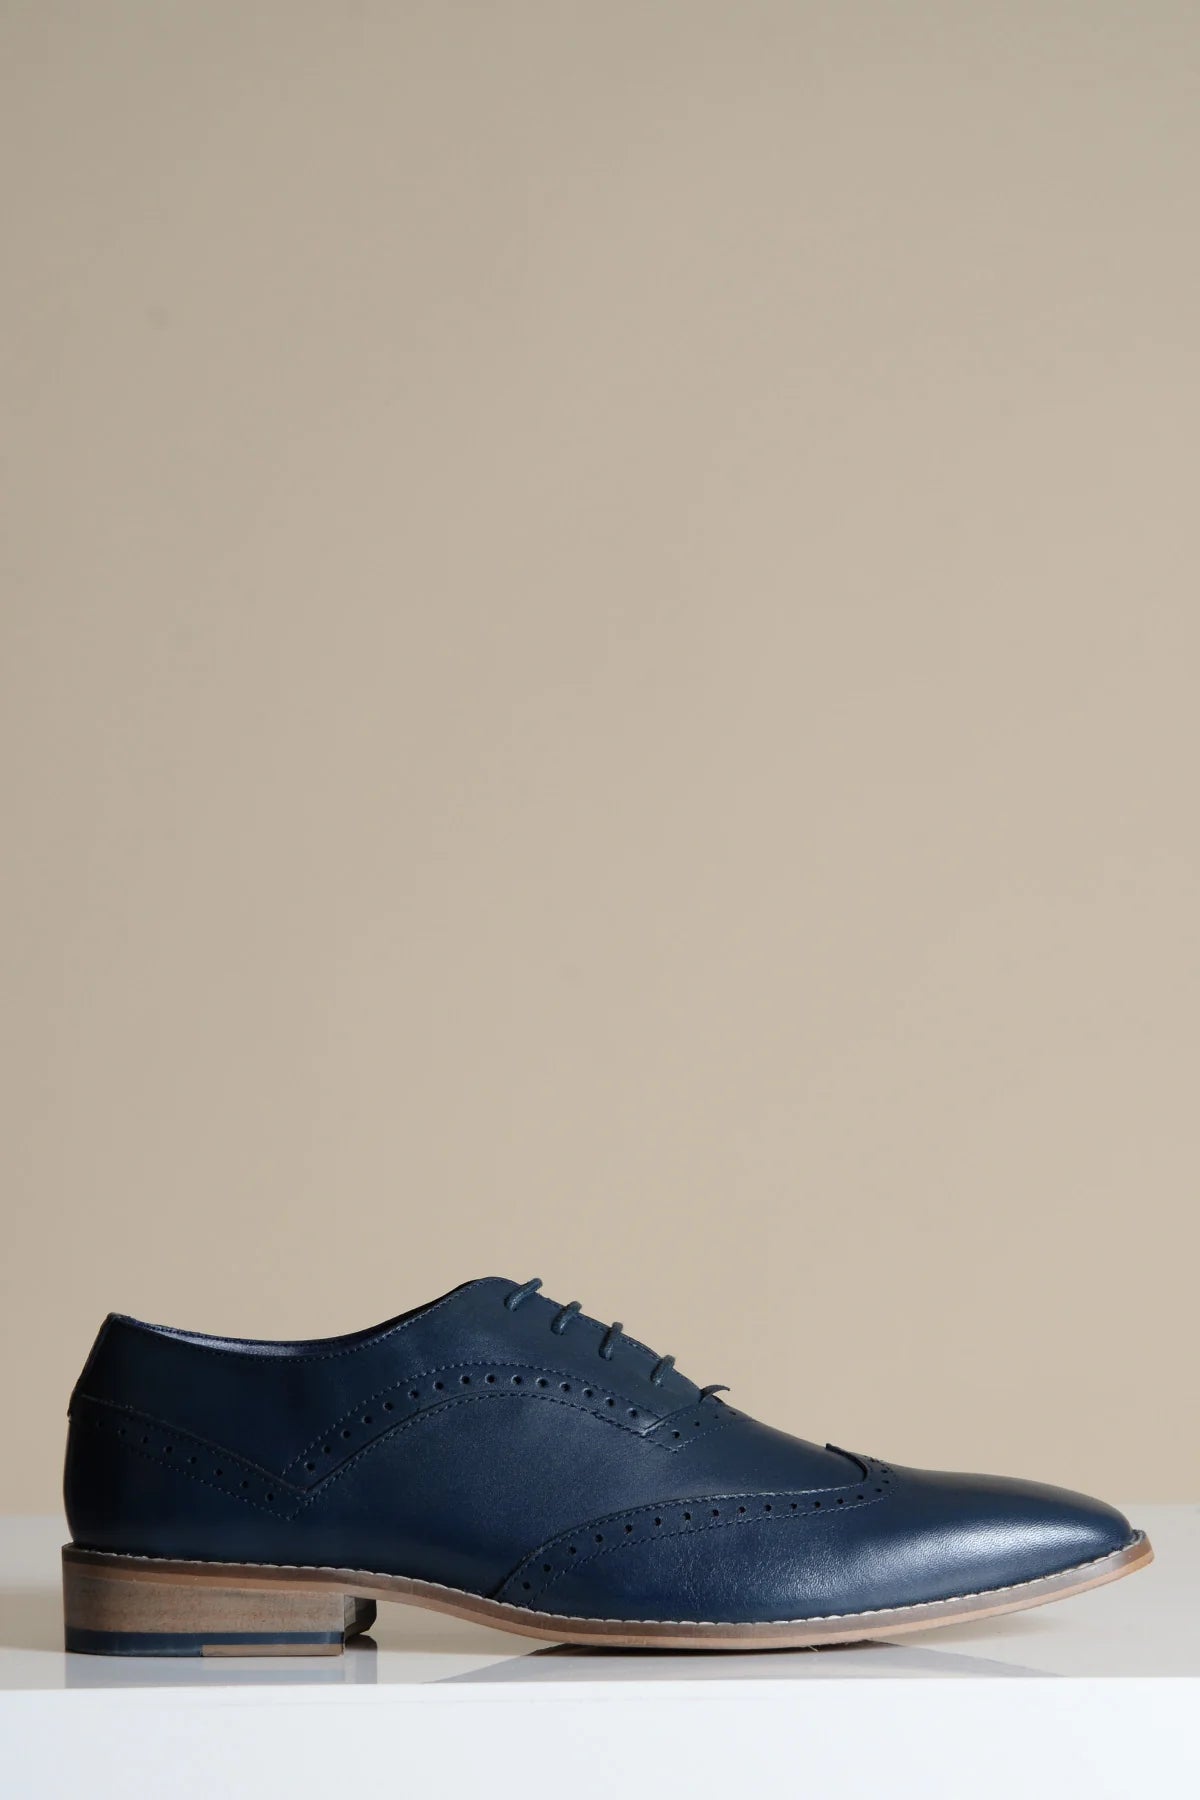 Chaussures en cuir bleu marine, Marc Darcy Dawson - Wingtip brogue